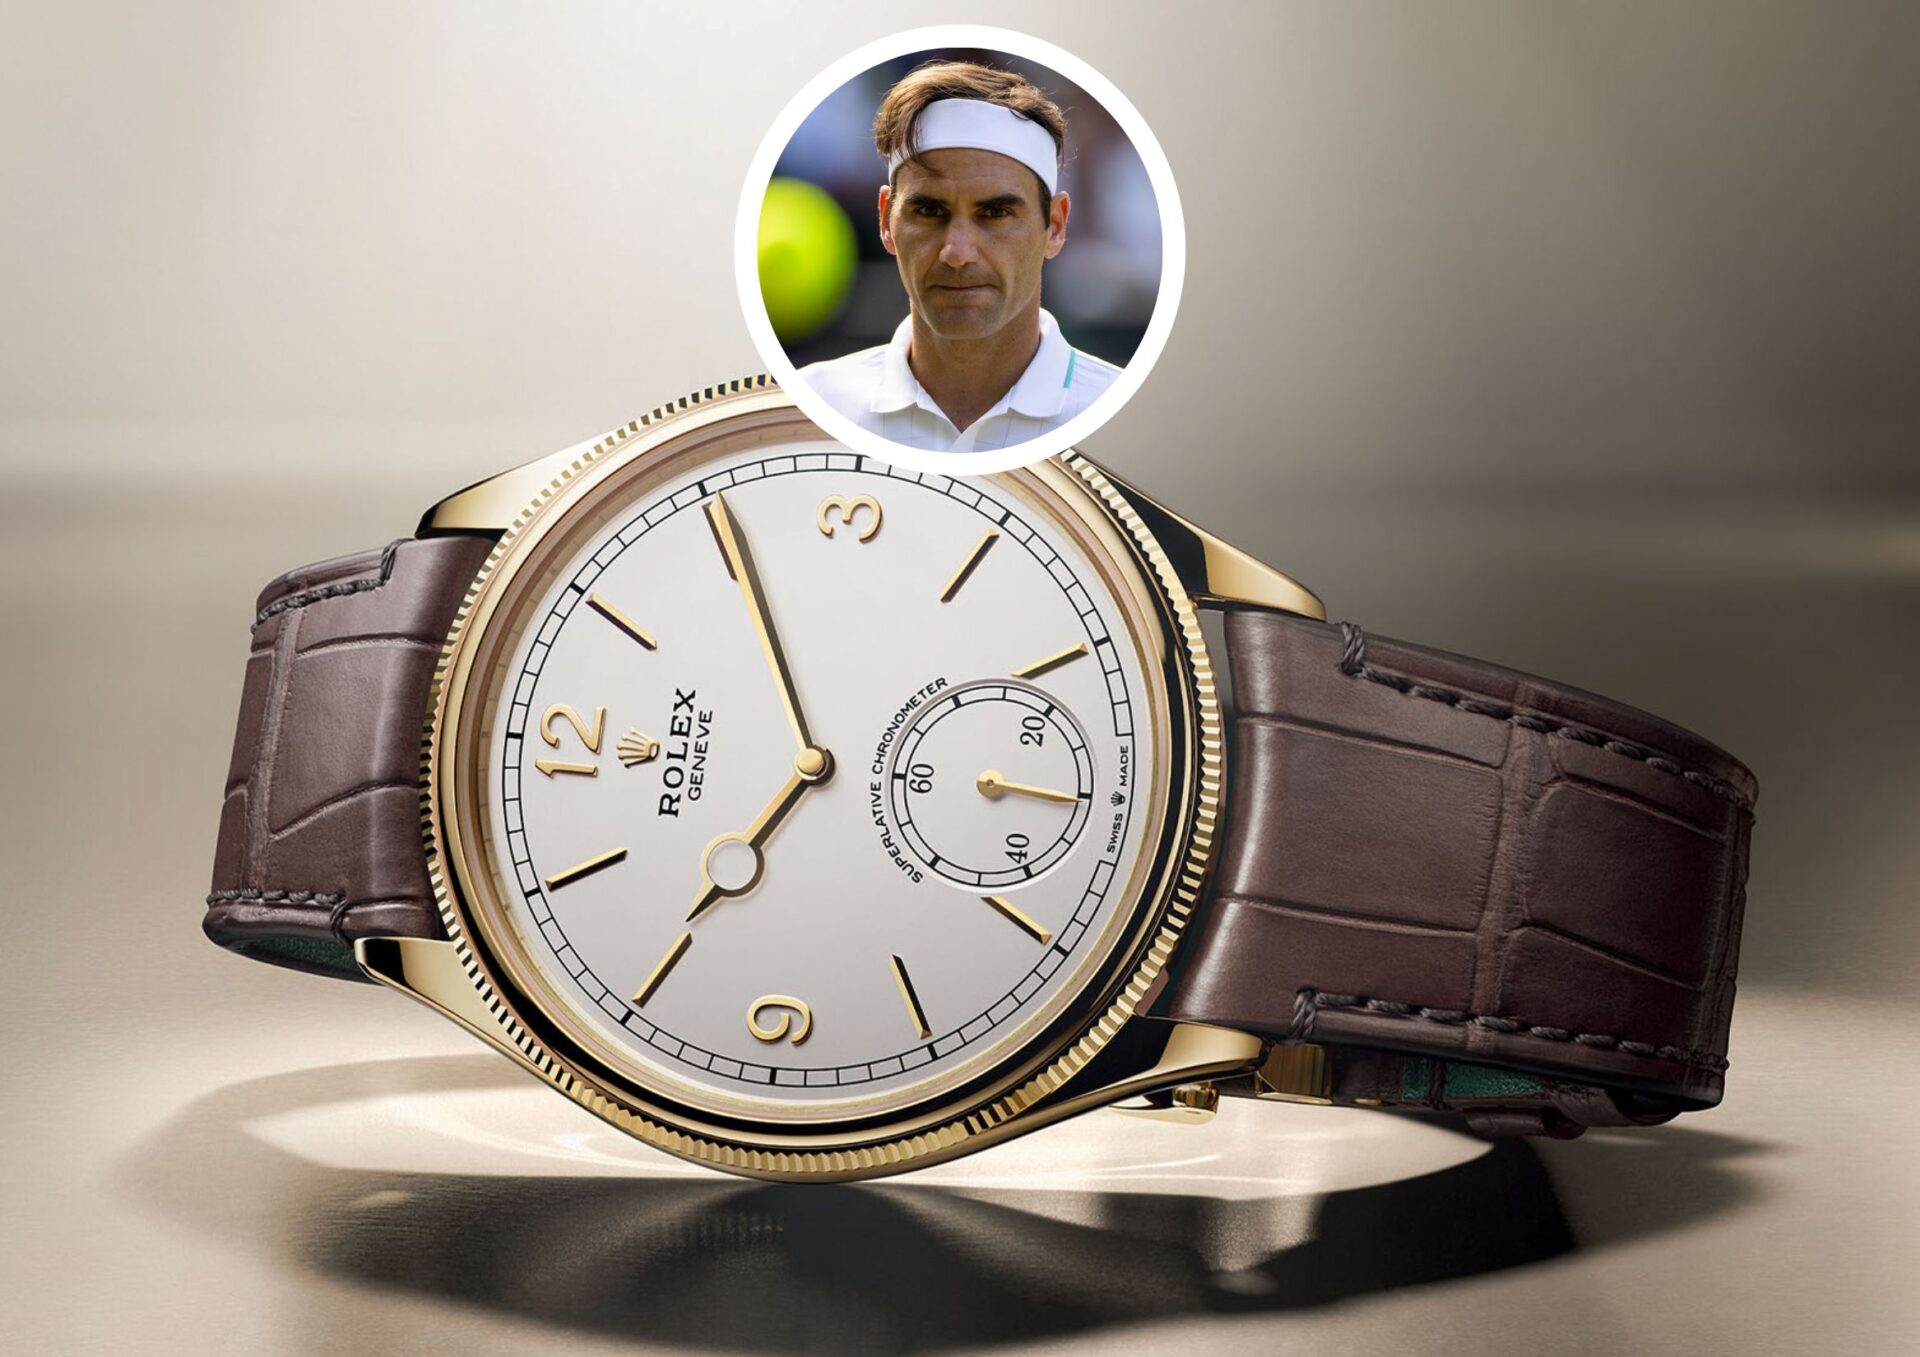 Roger Federer's Rolex Perpetual 1908